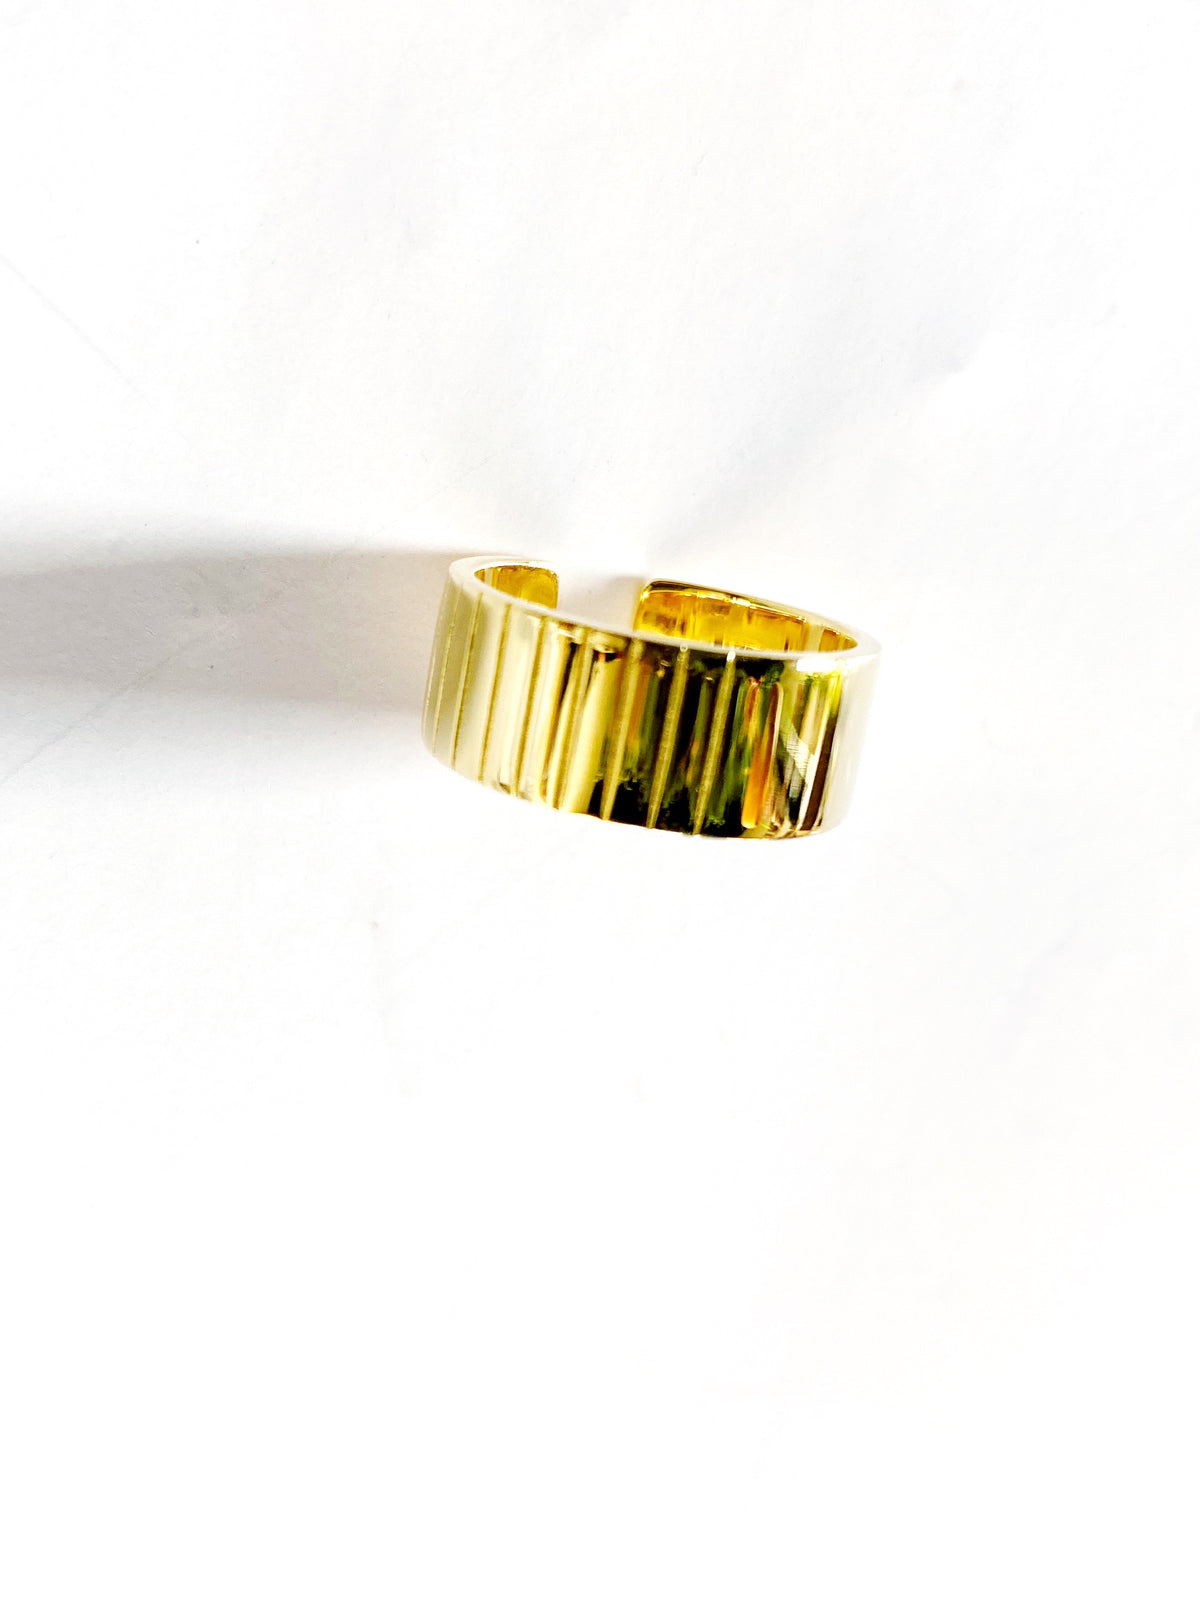 Gold Cigar band Adjustable Ring